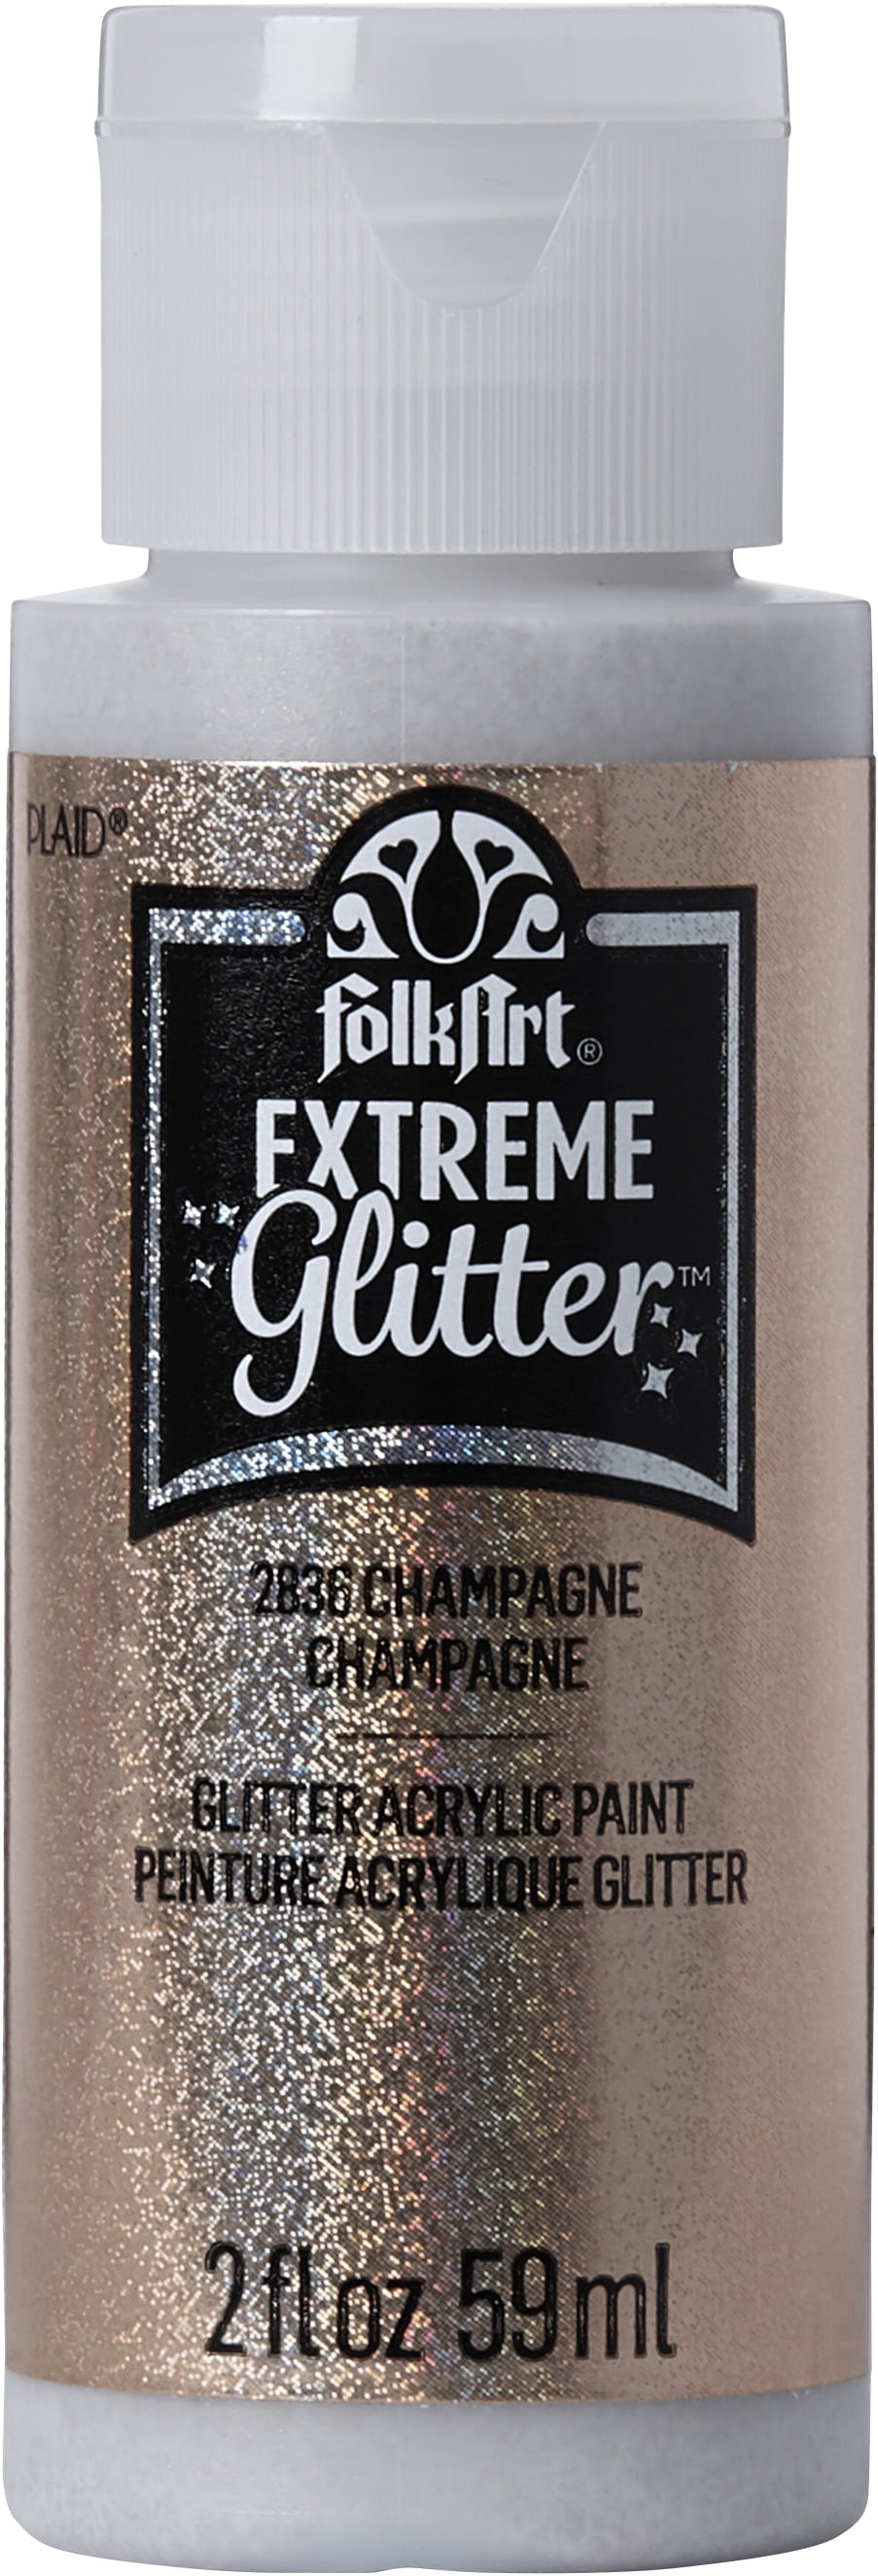 FolkArt Extreme Glitter Acrylic Craft Paint, Glitter Finish, Champagne, 2 fl oz